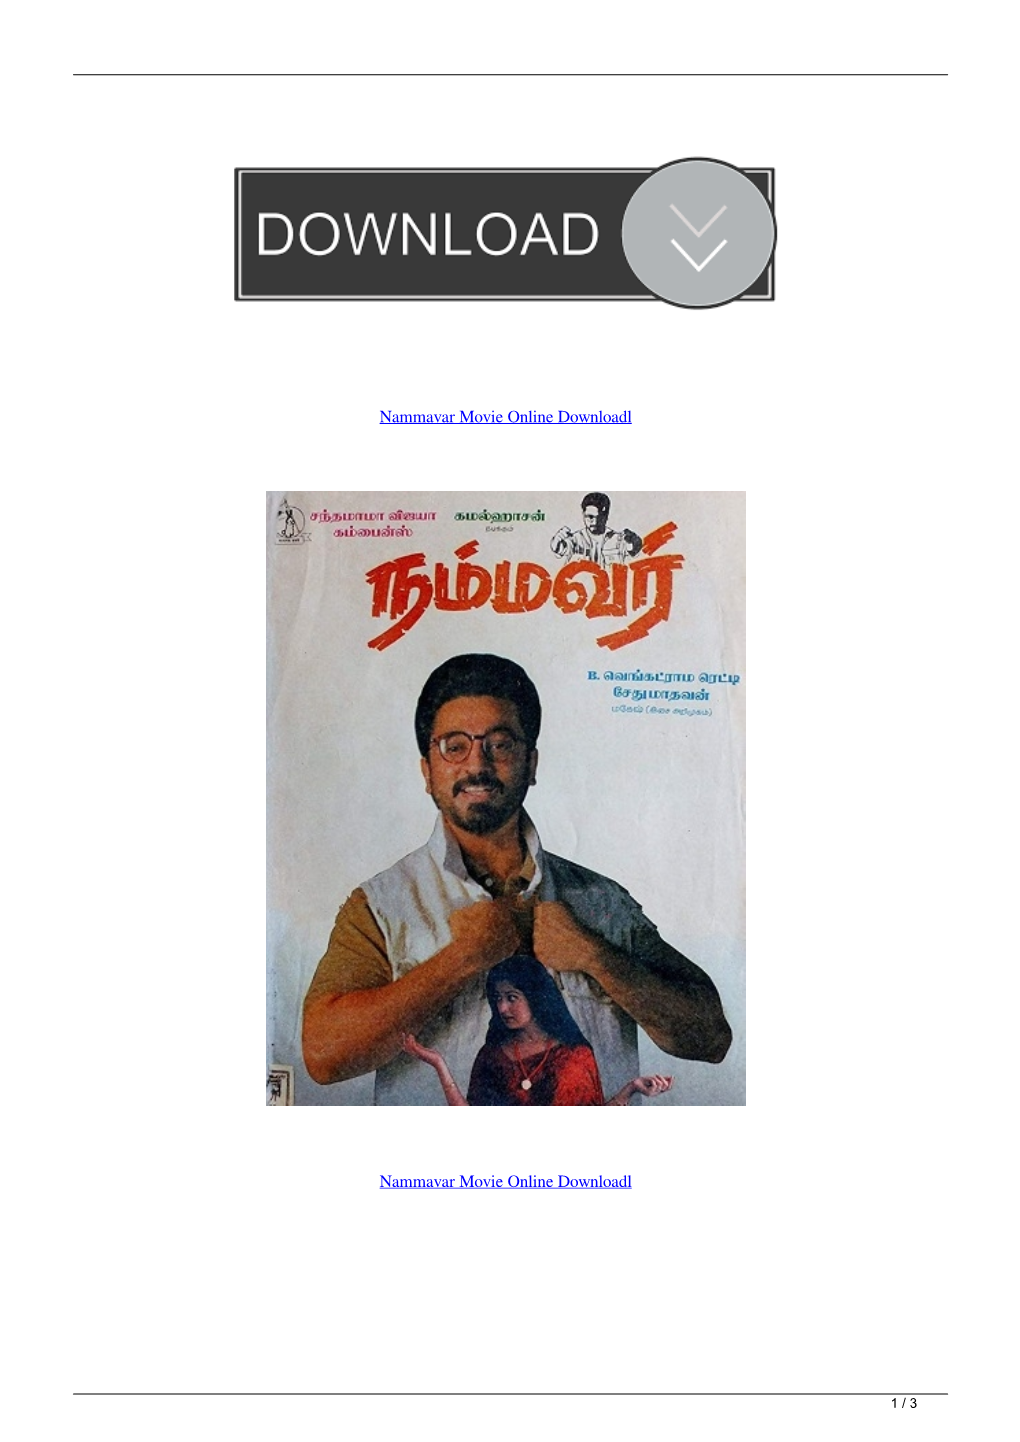 Nammavar Movie Online Downloadl